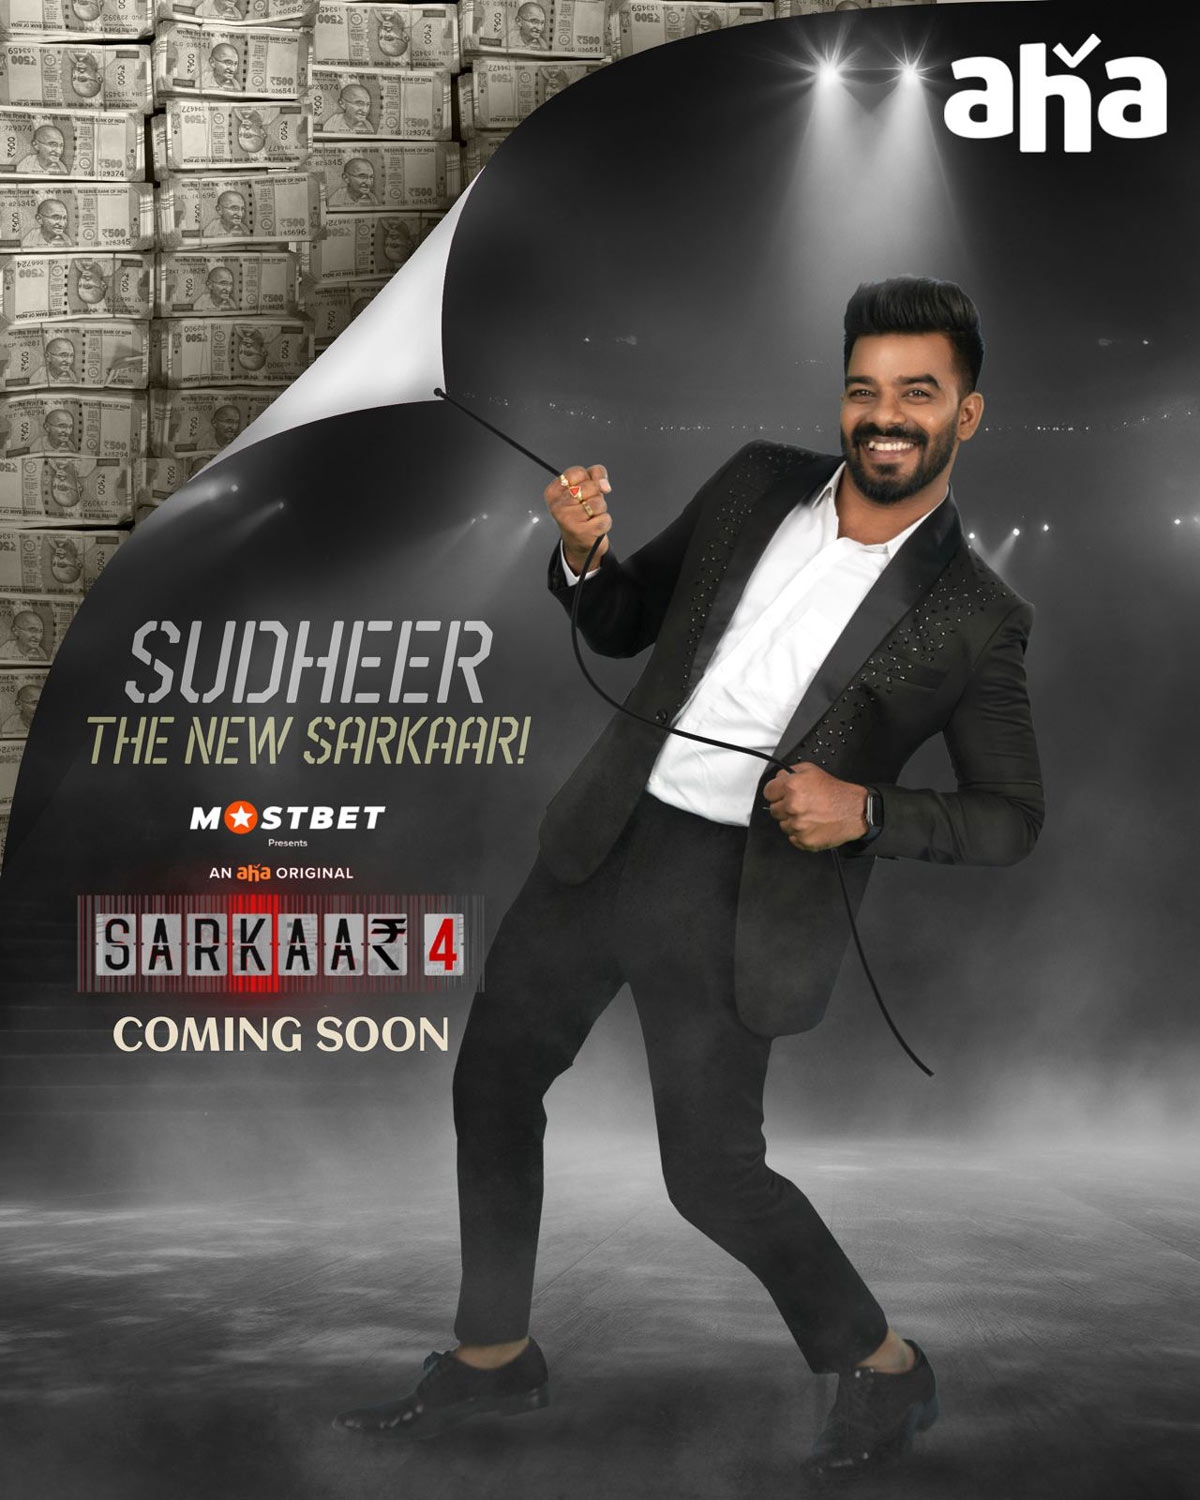 Sudigali Sudheer to host Sarkar Season 4 for Aha